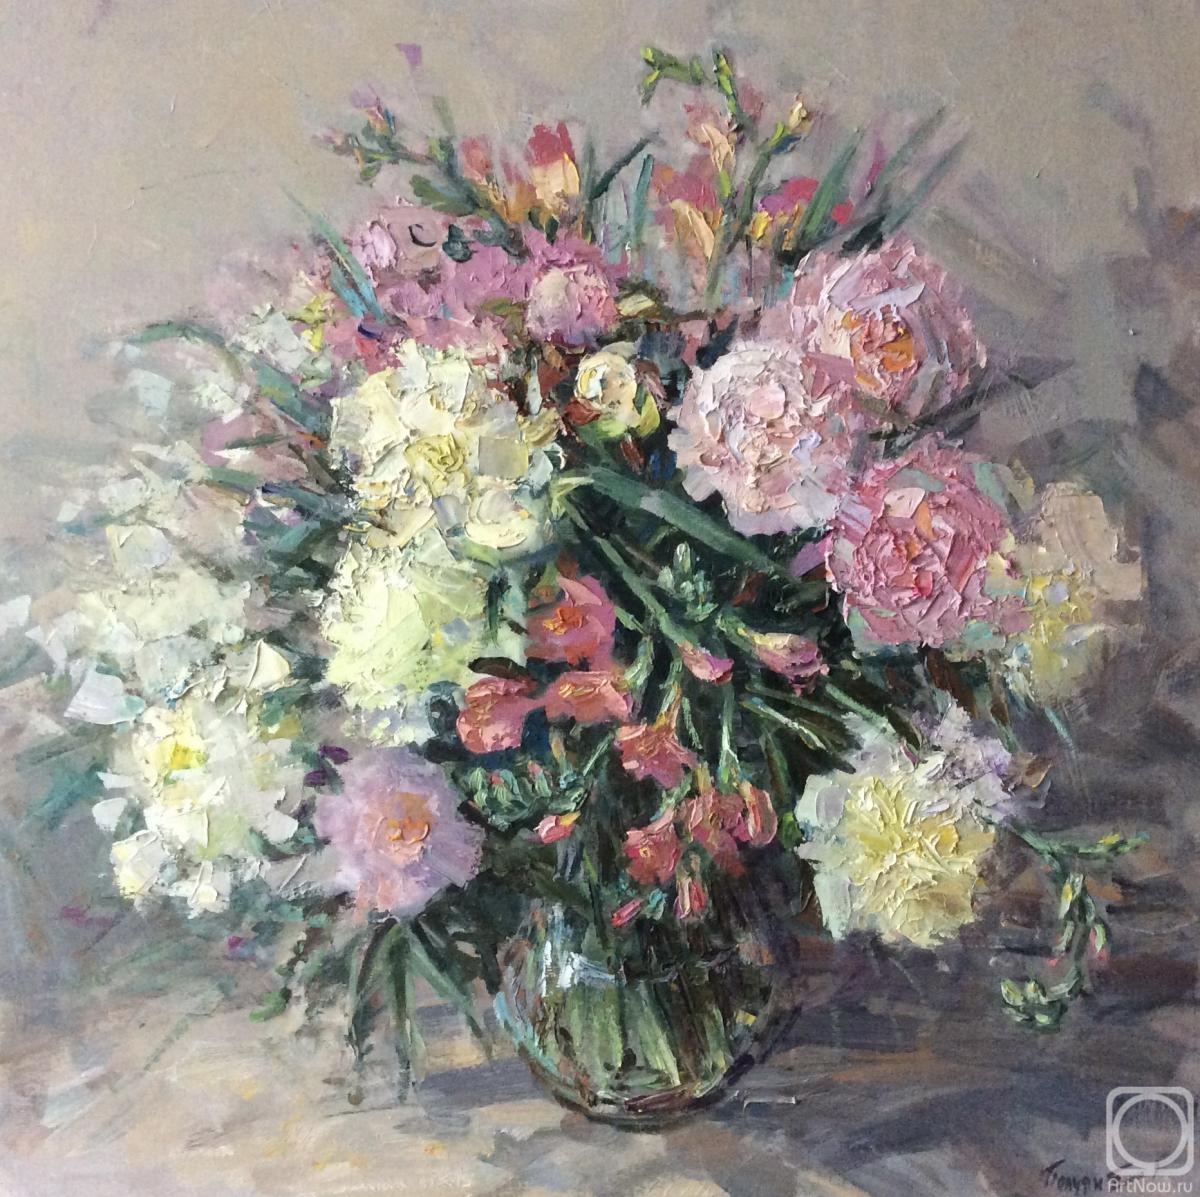 Poluyan Yelena. Bouquet with flowers peonies